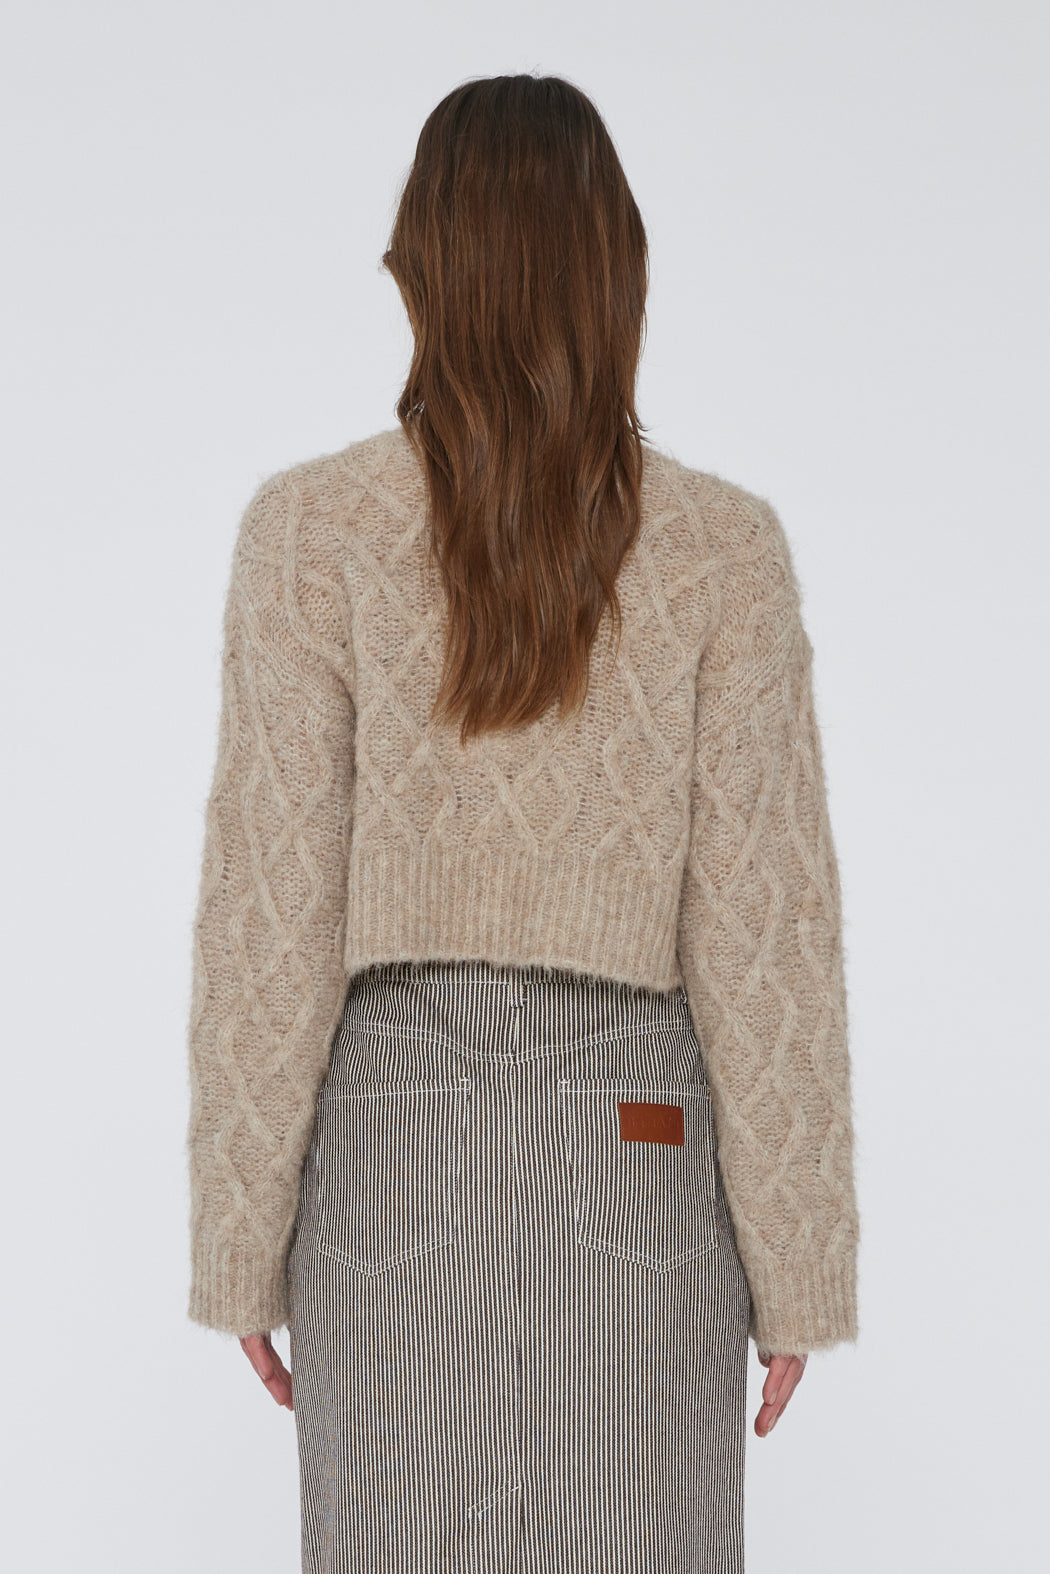 Remain Knit Melange Sweater